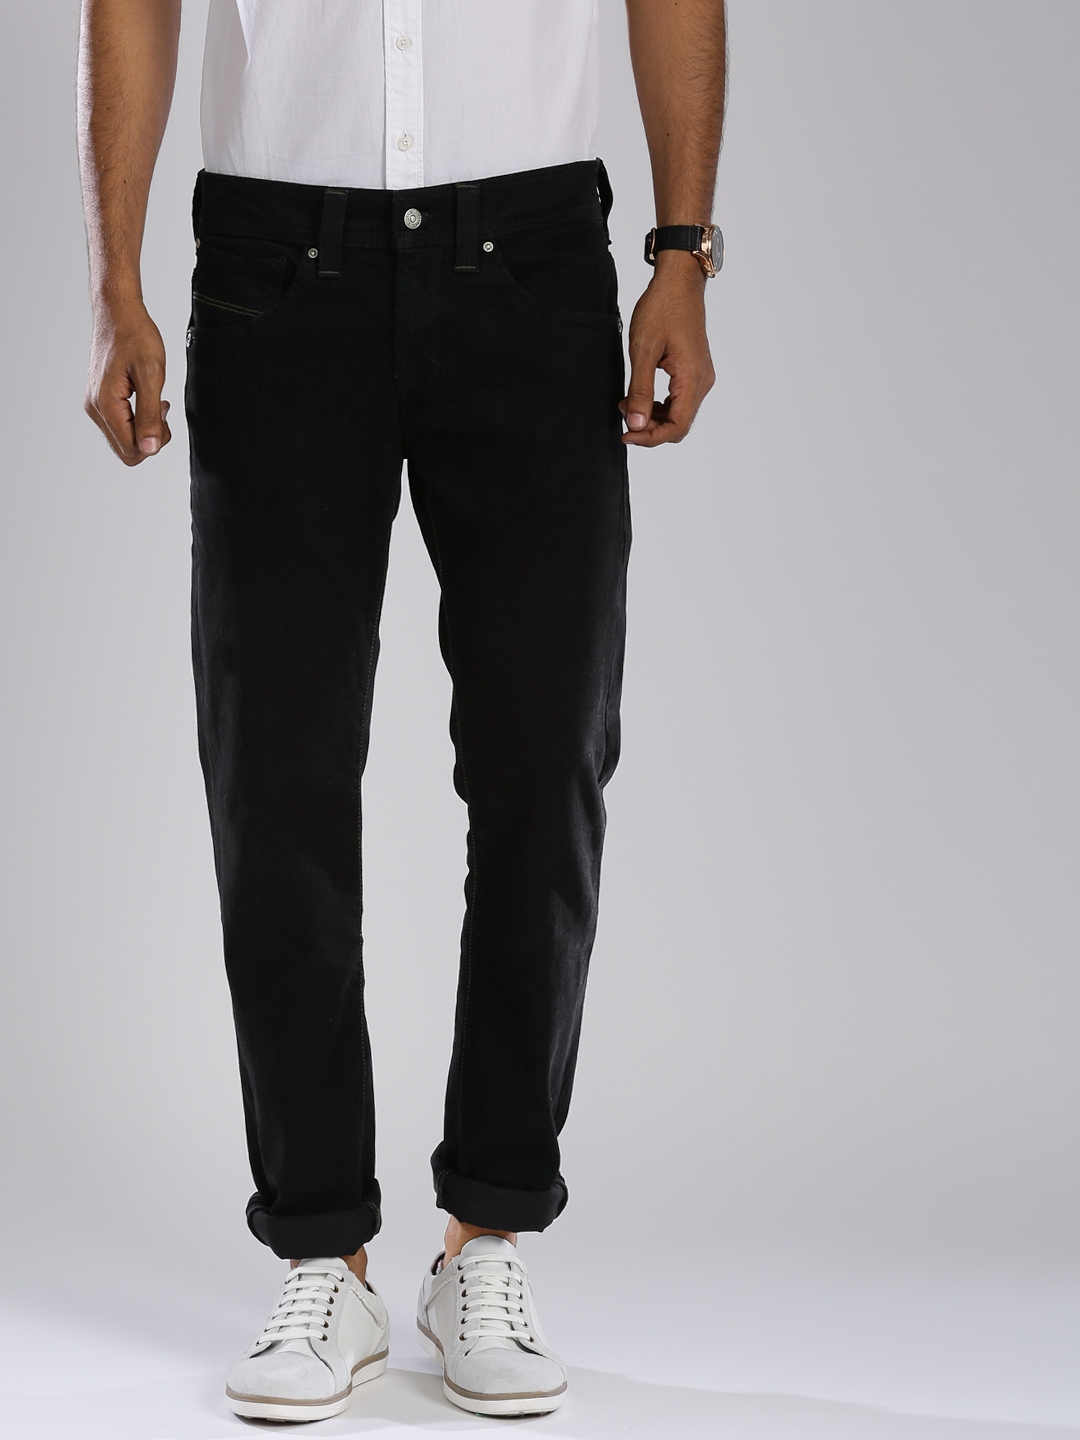 Buy Levi's Black Slim Fit Jeans 511 - Jeans for Men 1424079 | Myntra